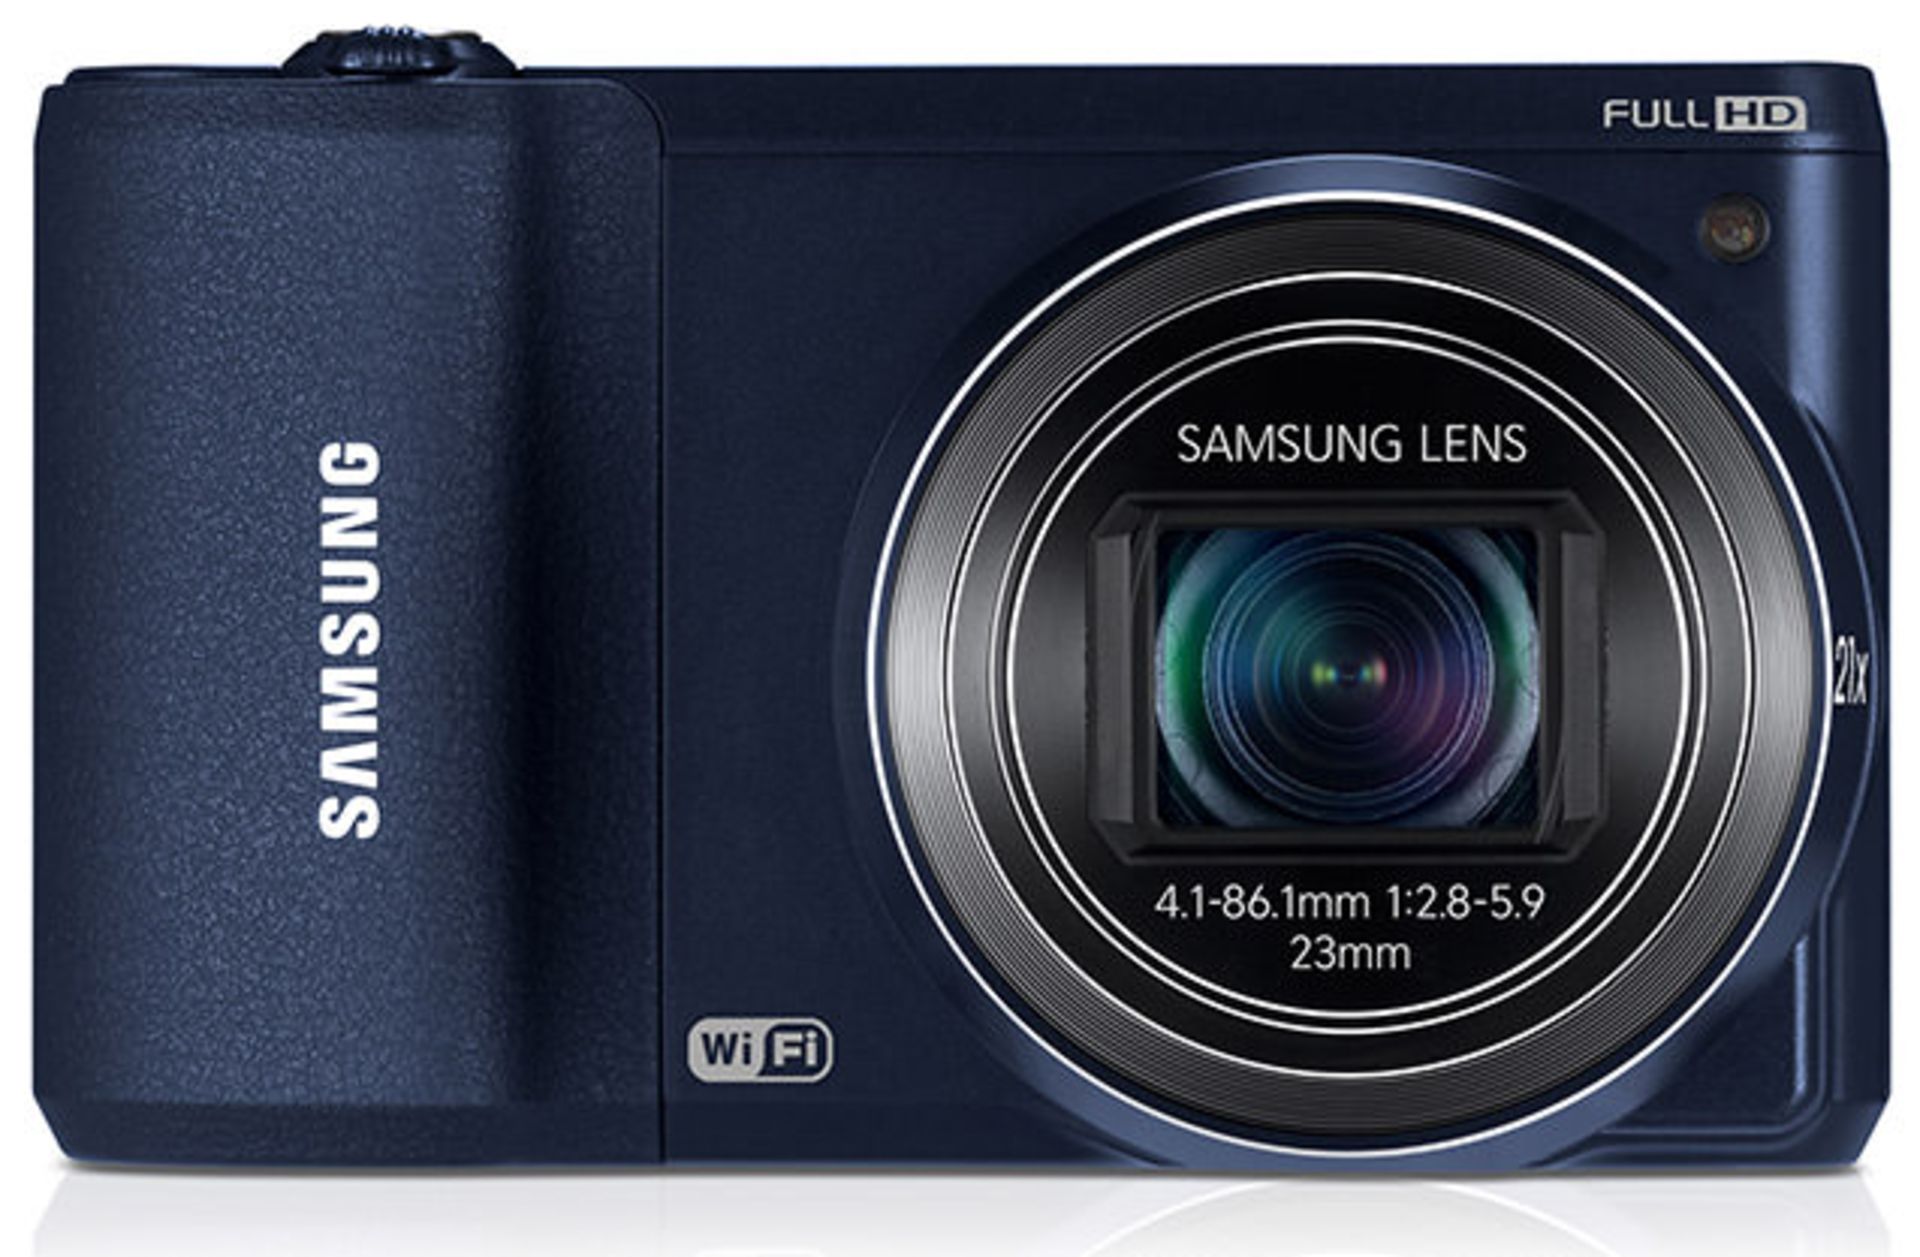 samsung-smart-camera-wb800f